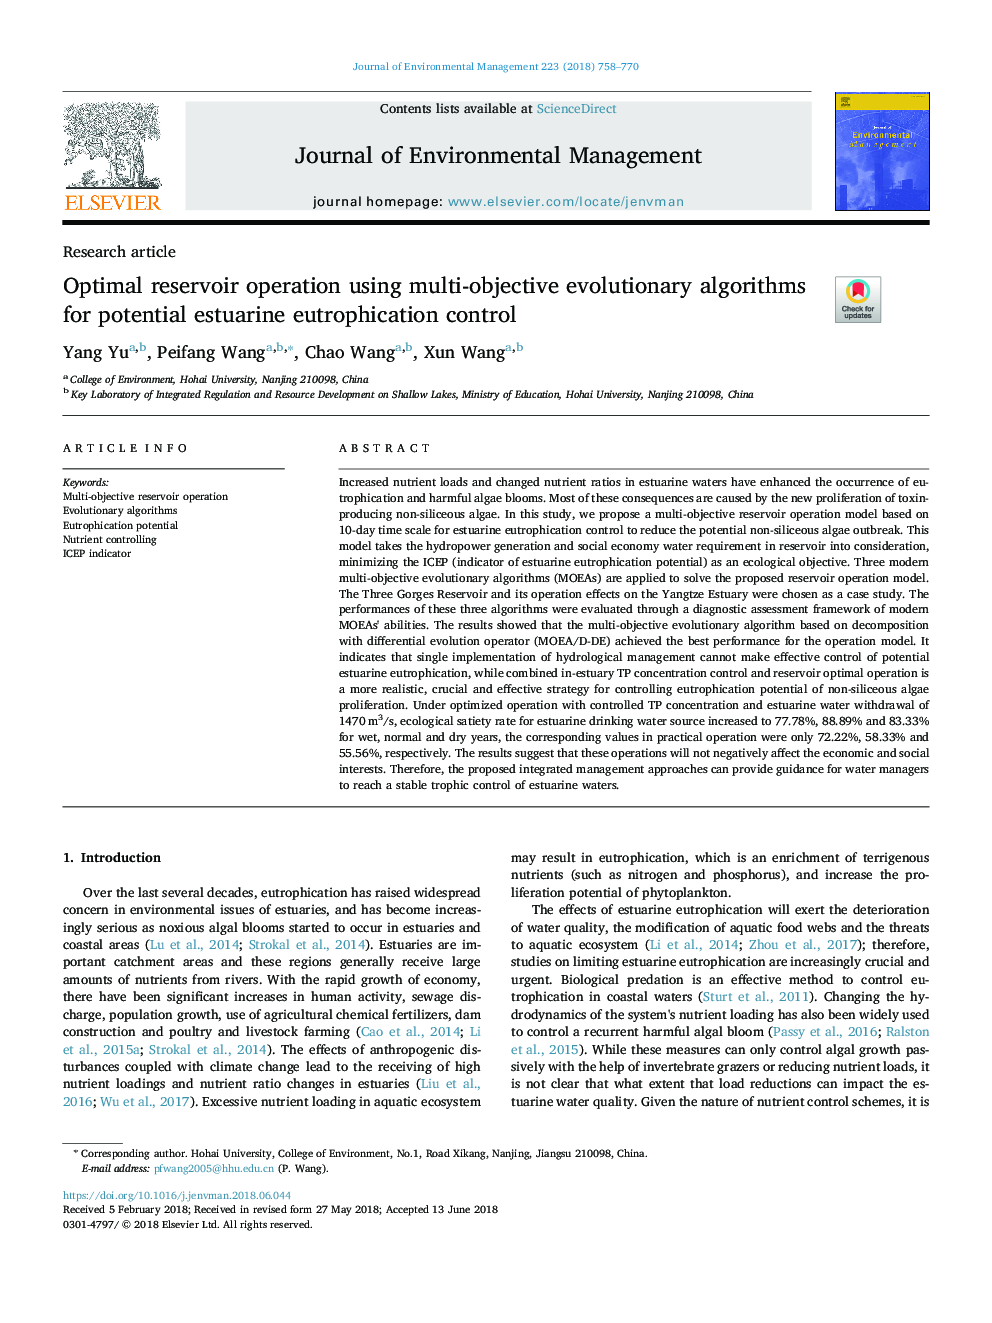 Optimal reservoir operation using multi-objective evolutionary algorithms for potential estuarine eutrophication control